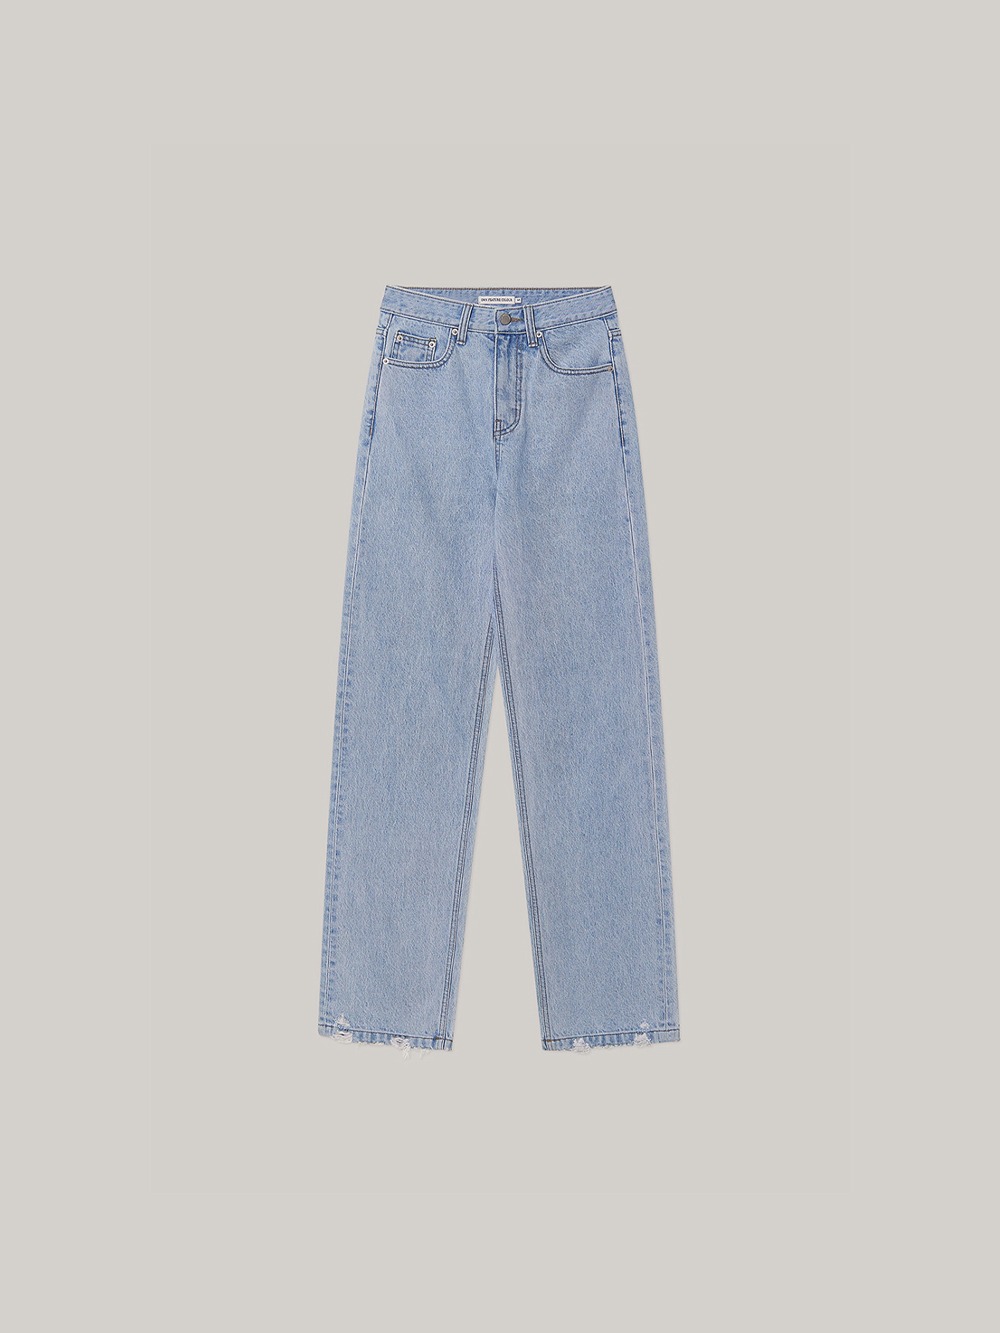 Vintage Denim Pants (ice blue)